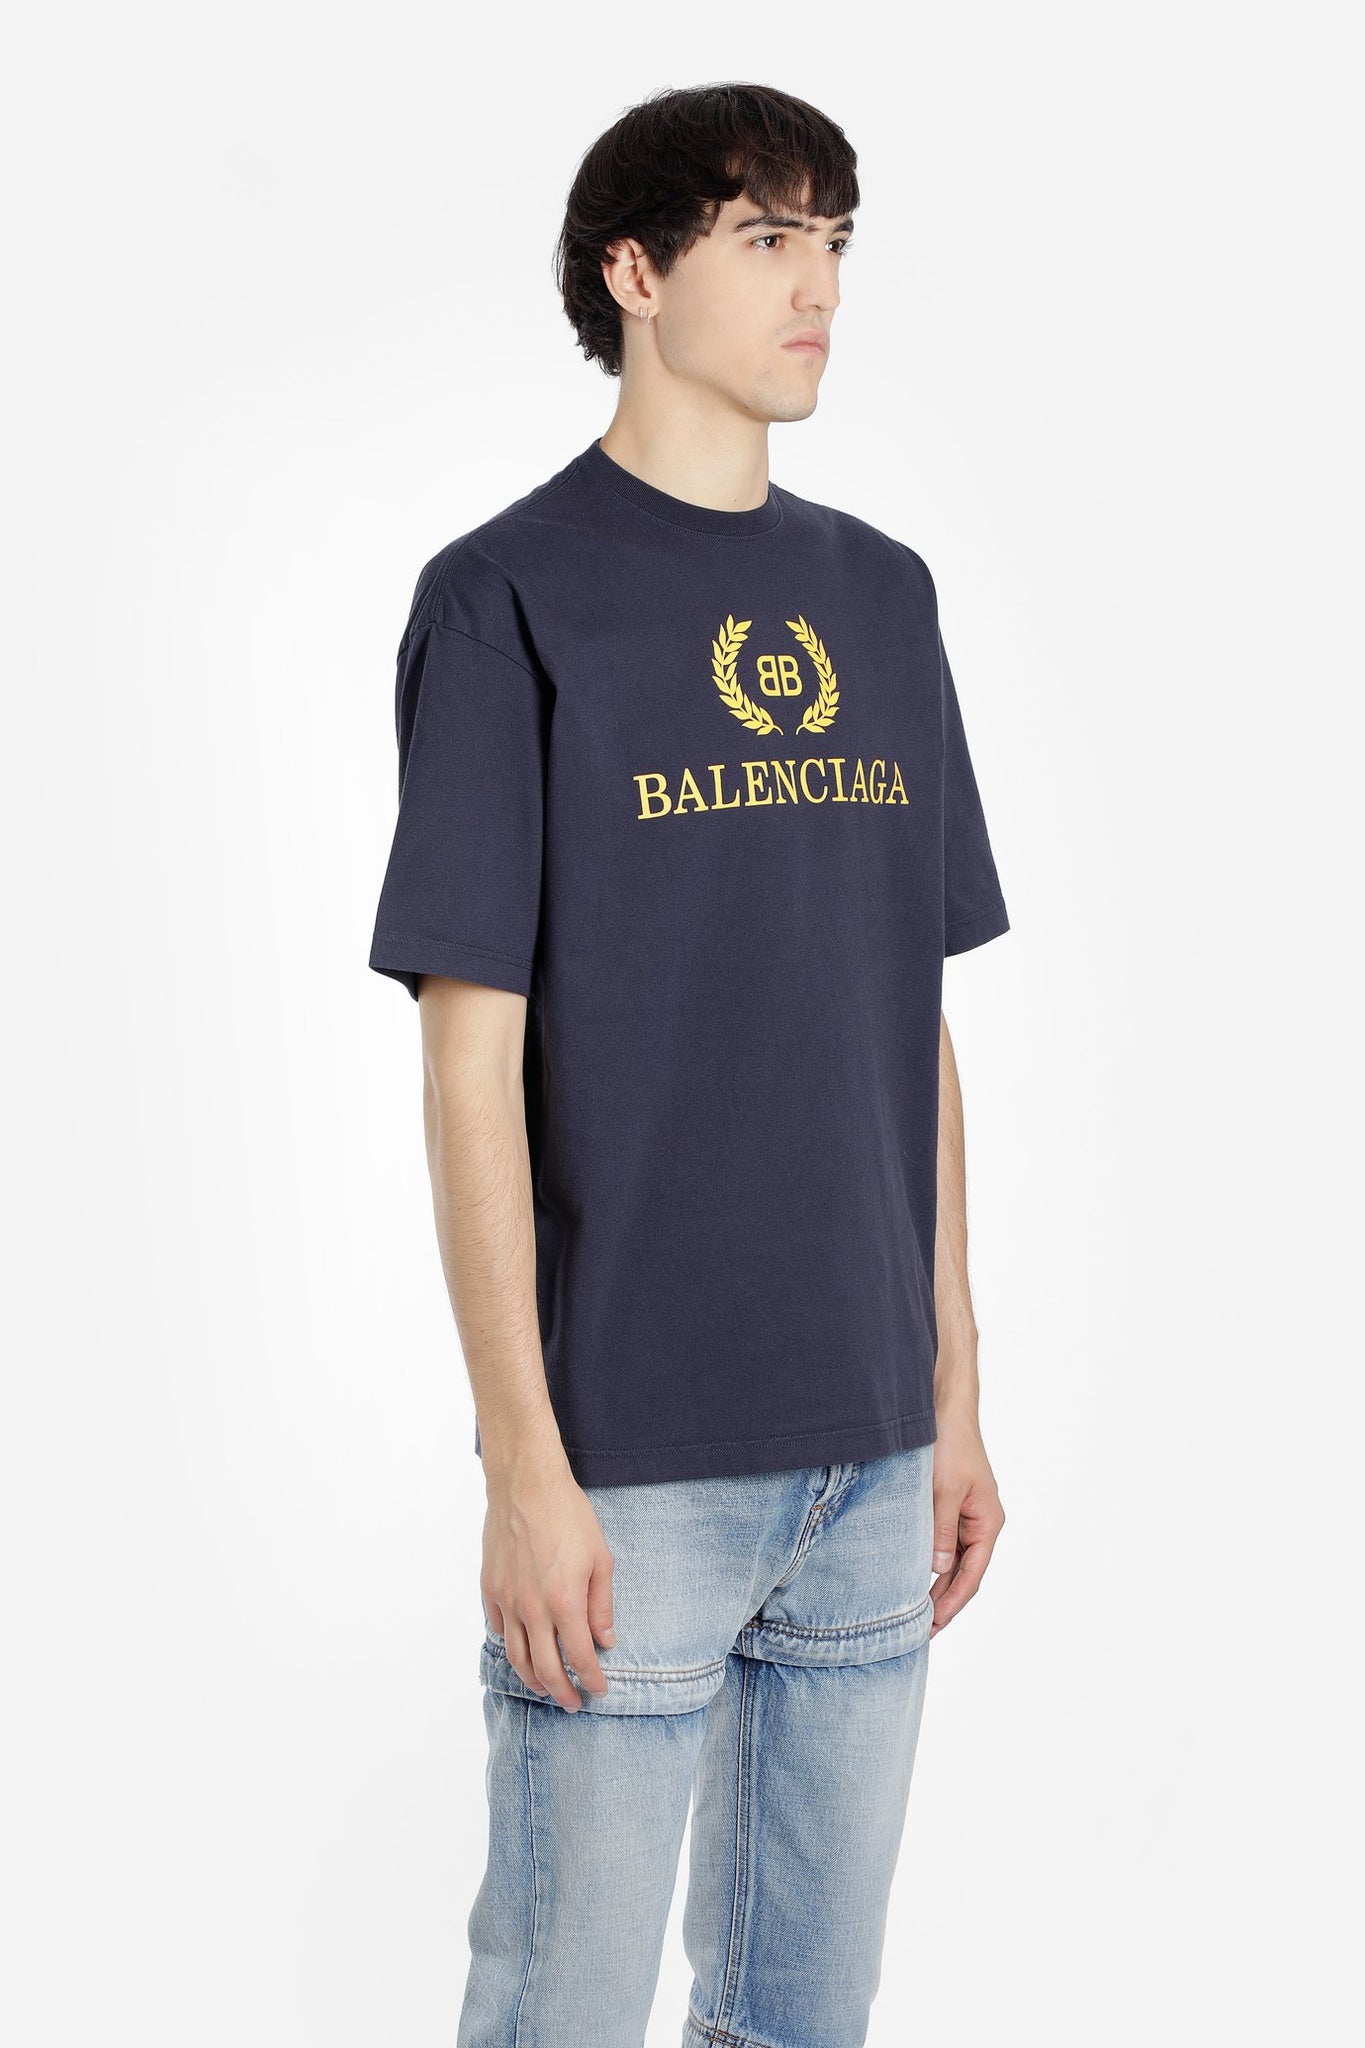 Balenciaga BB TShirt Light Blue interlocking logo tee cotton Size S  eBay